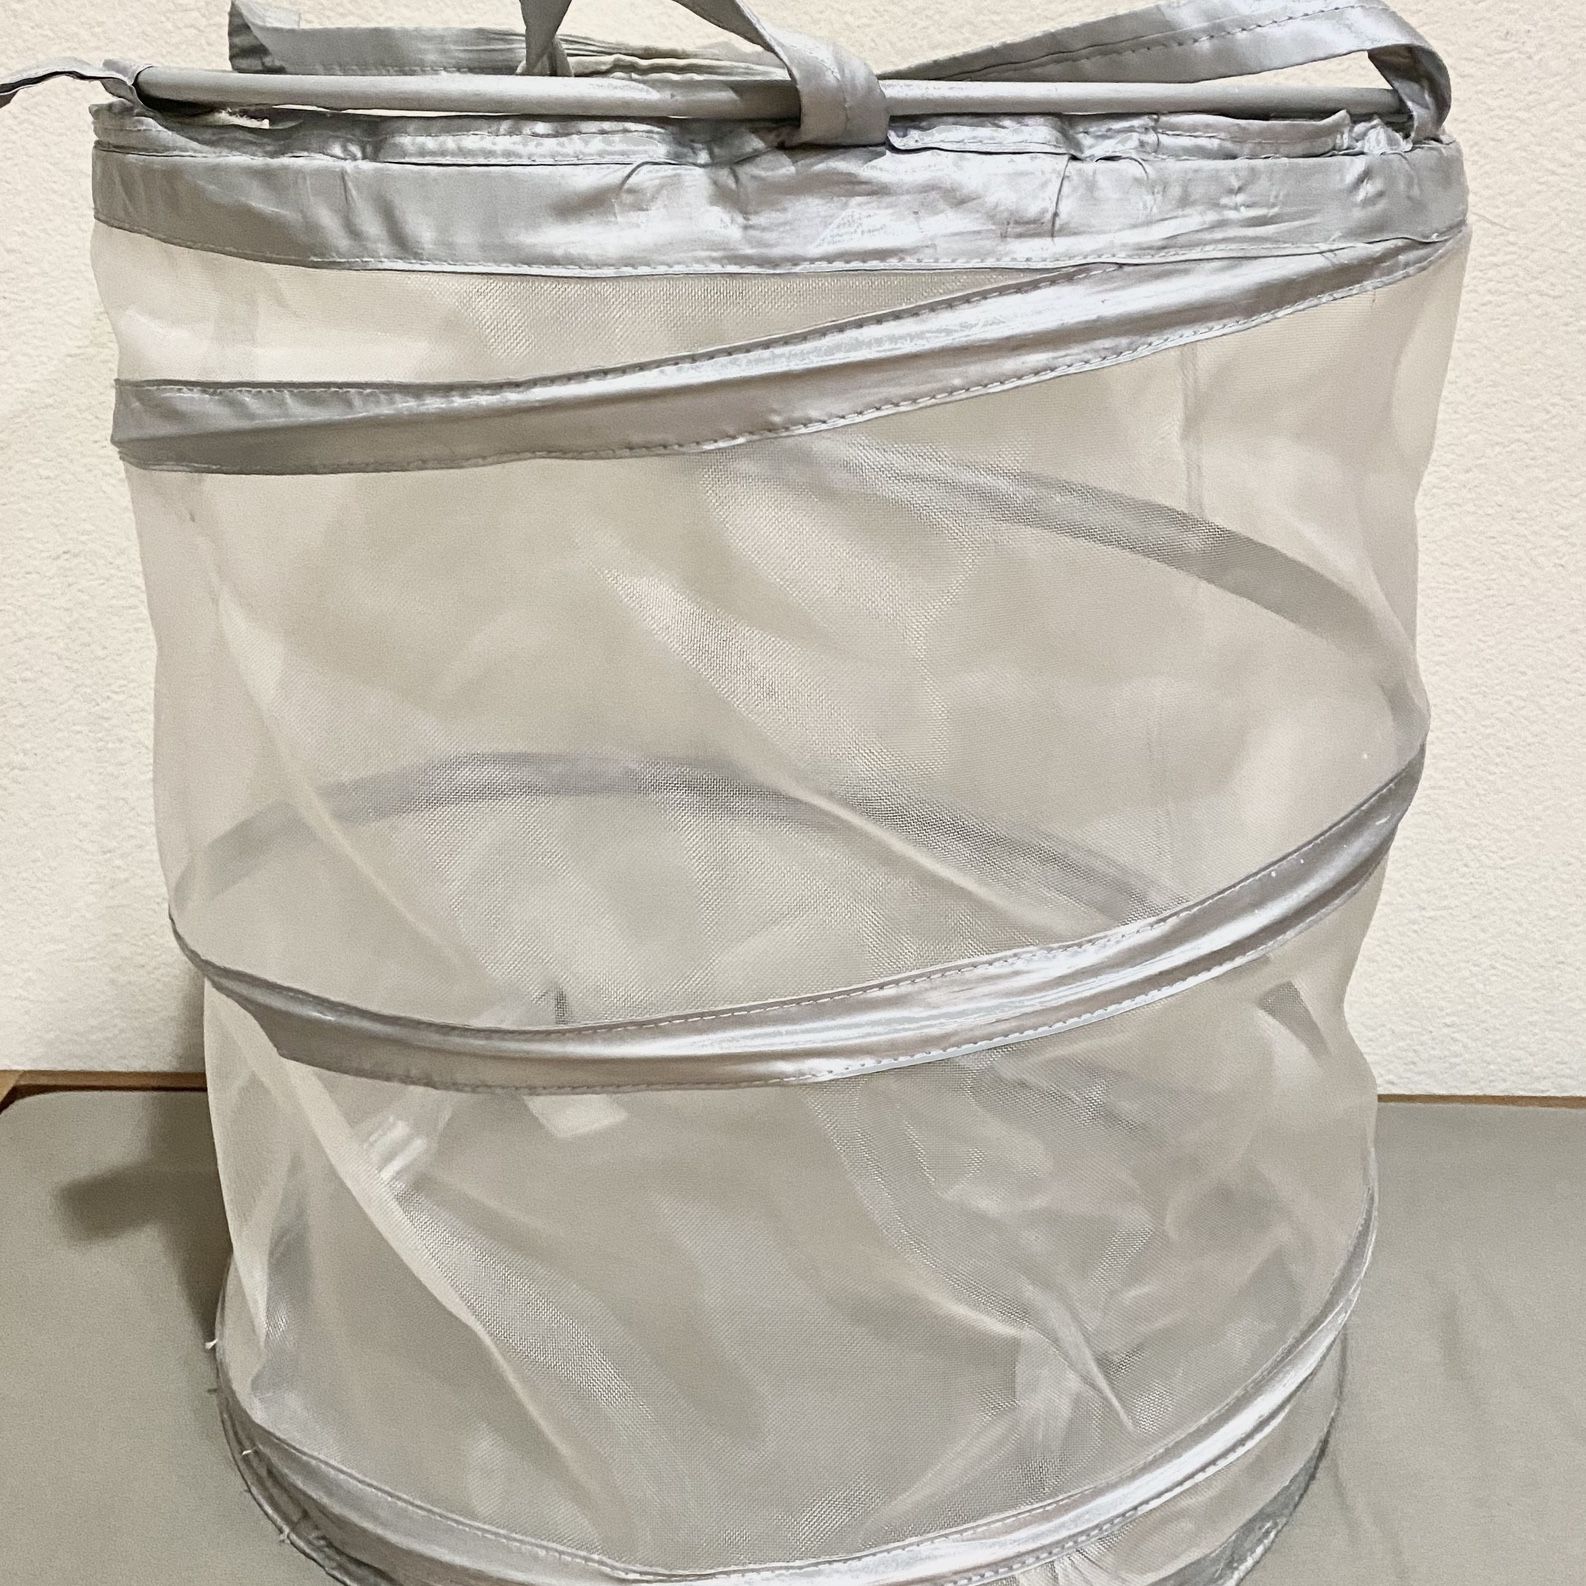 FYLLEN Laundry basket, white, 21 gallon - IKEA